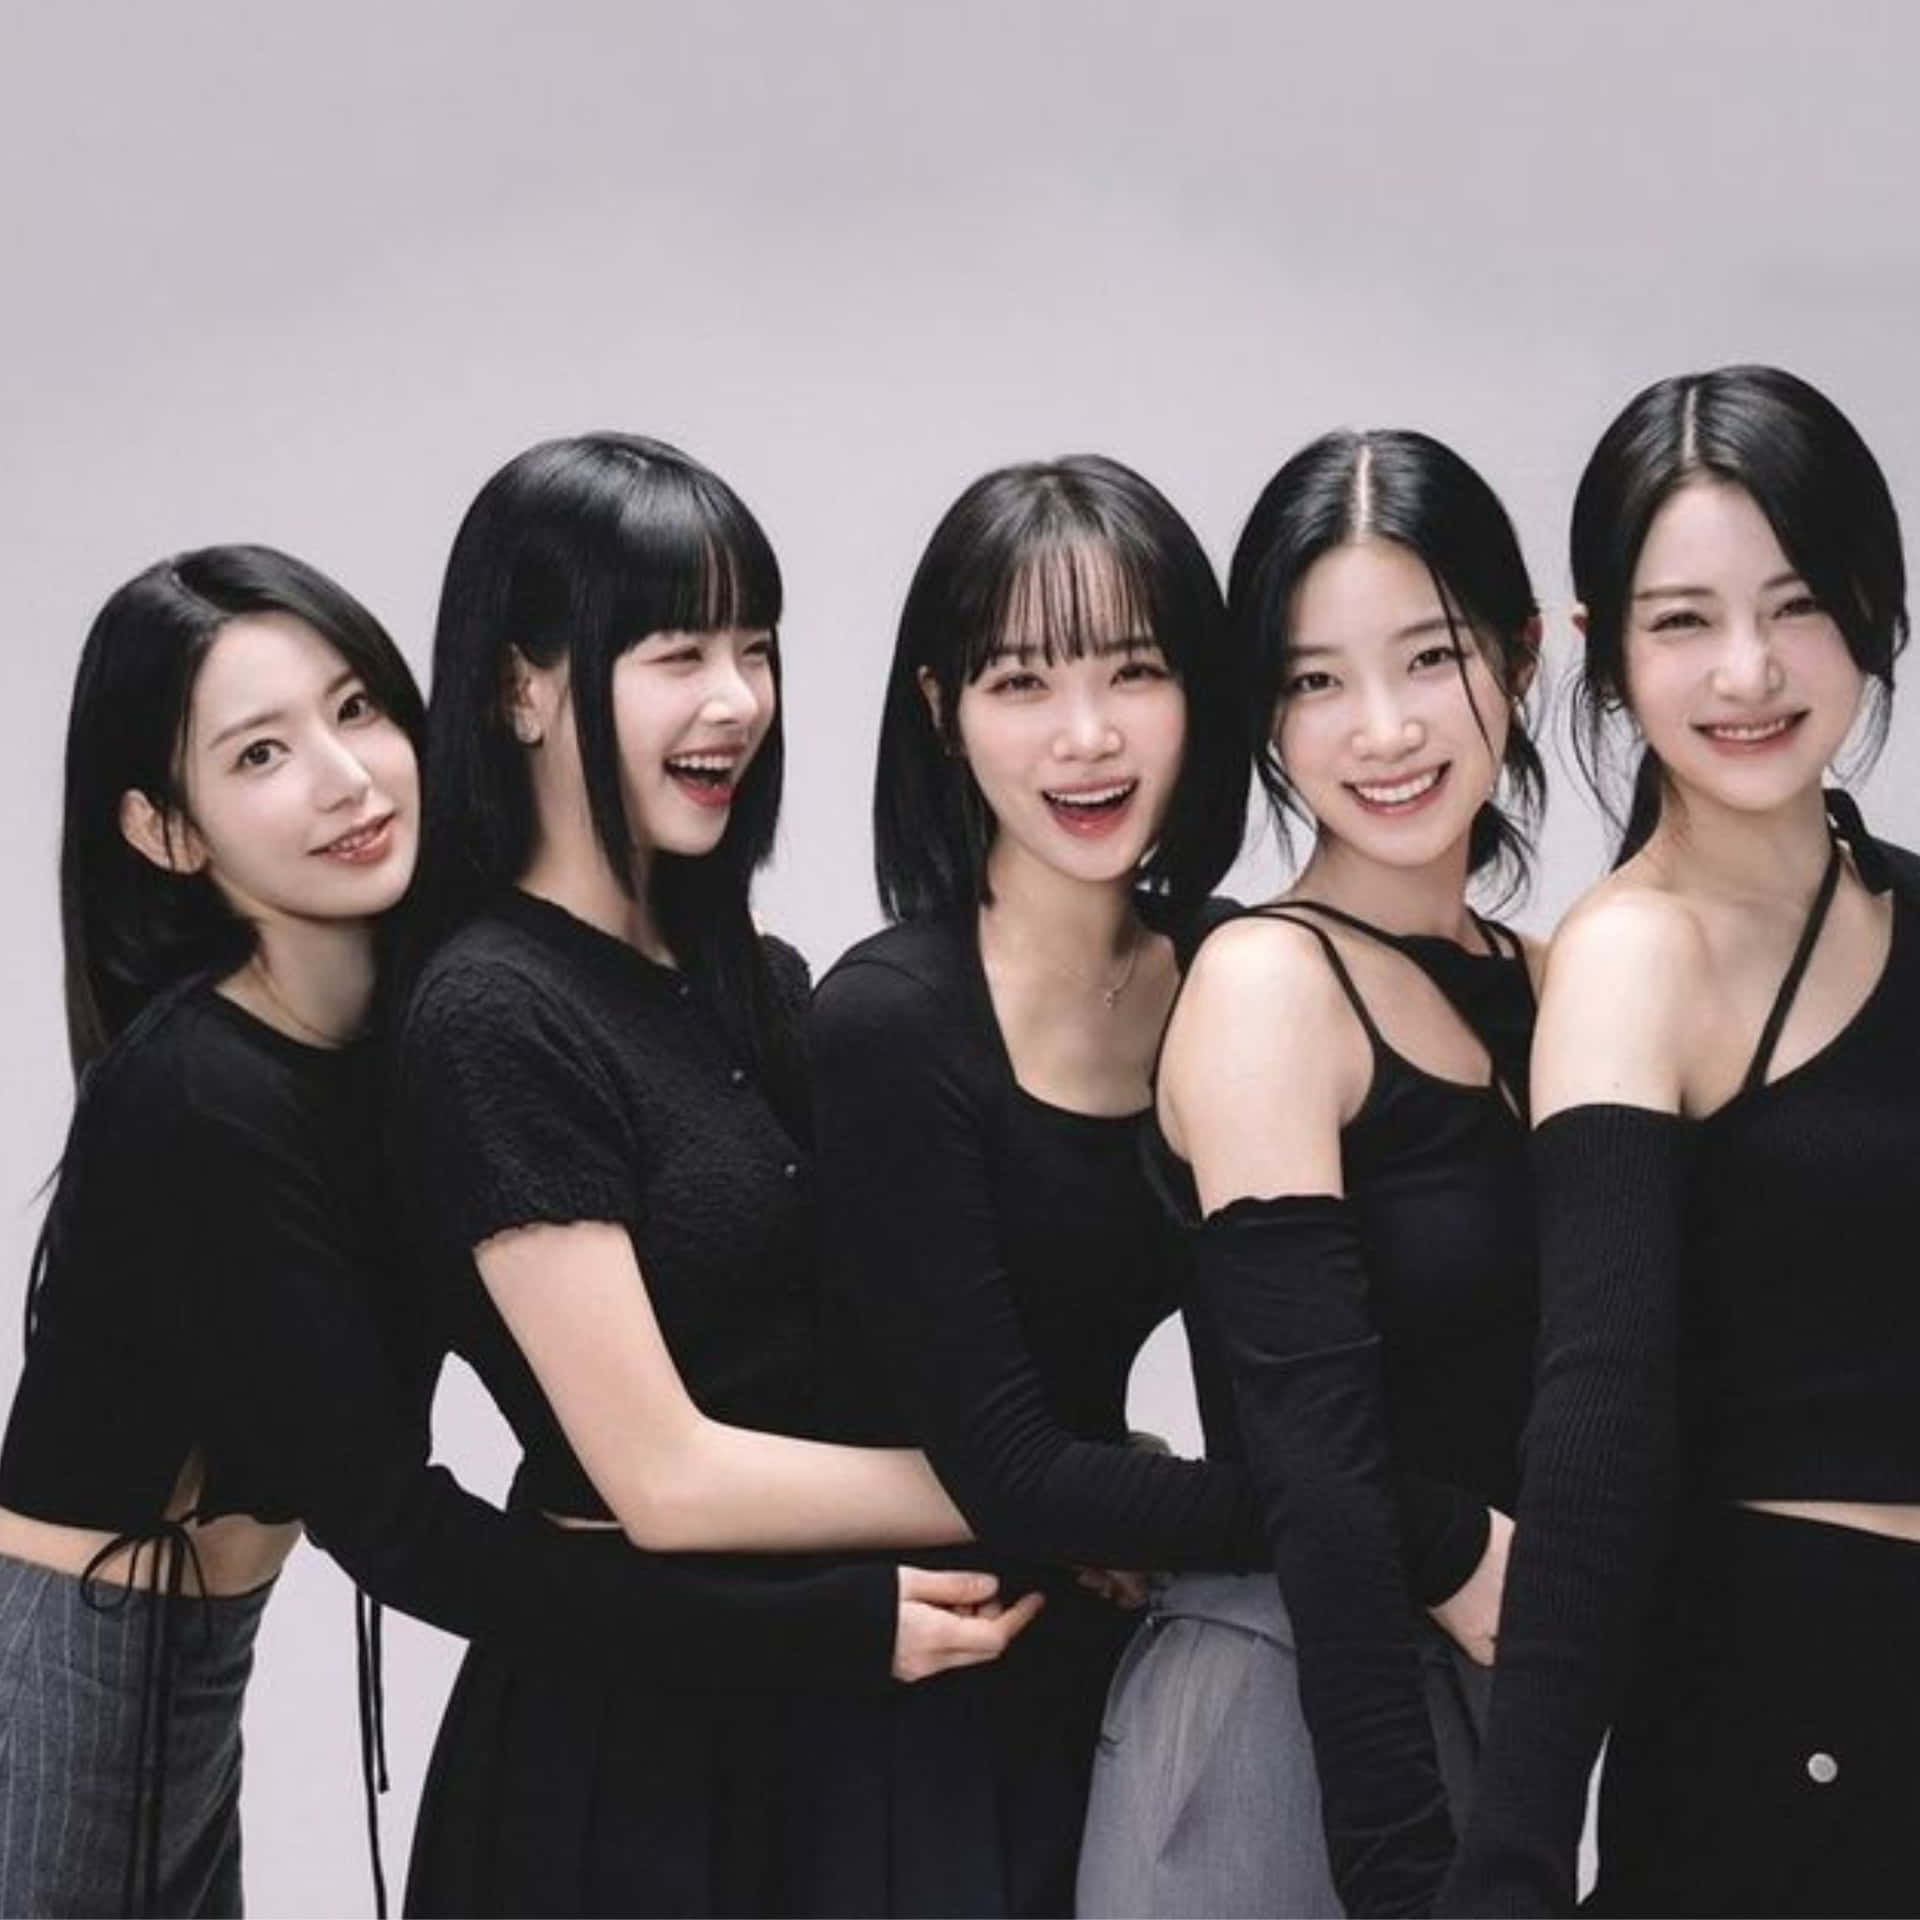 Kpop Group Smilingin Black Attire Wallpaper